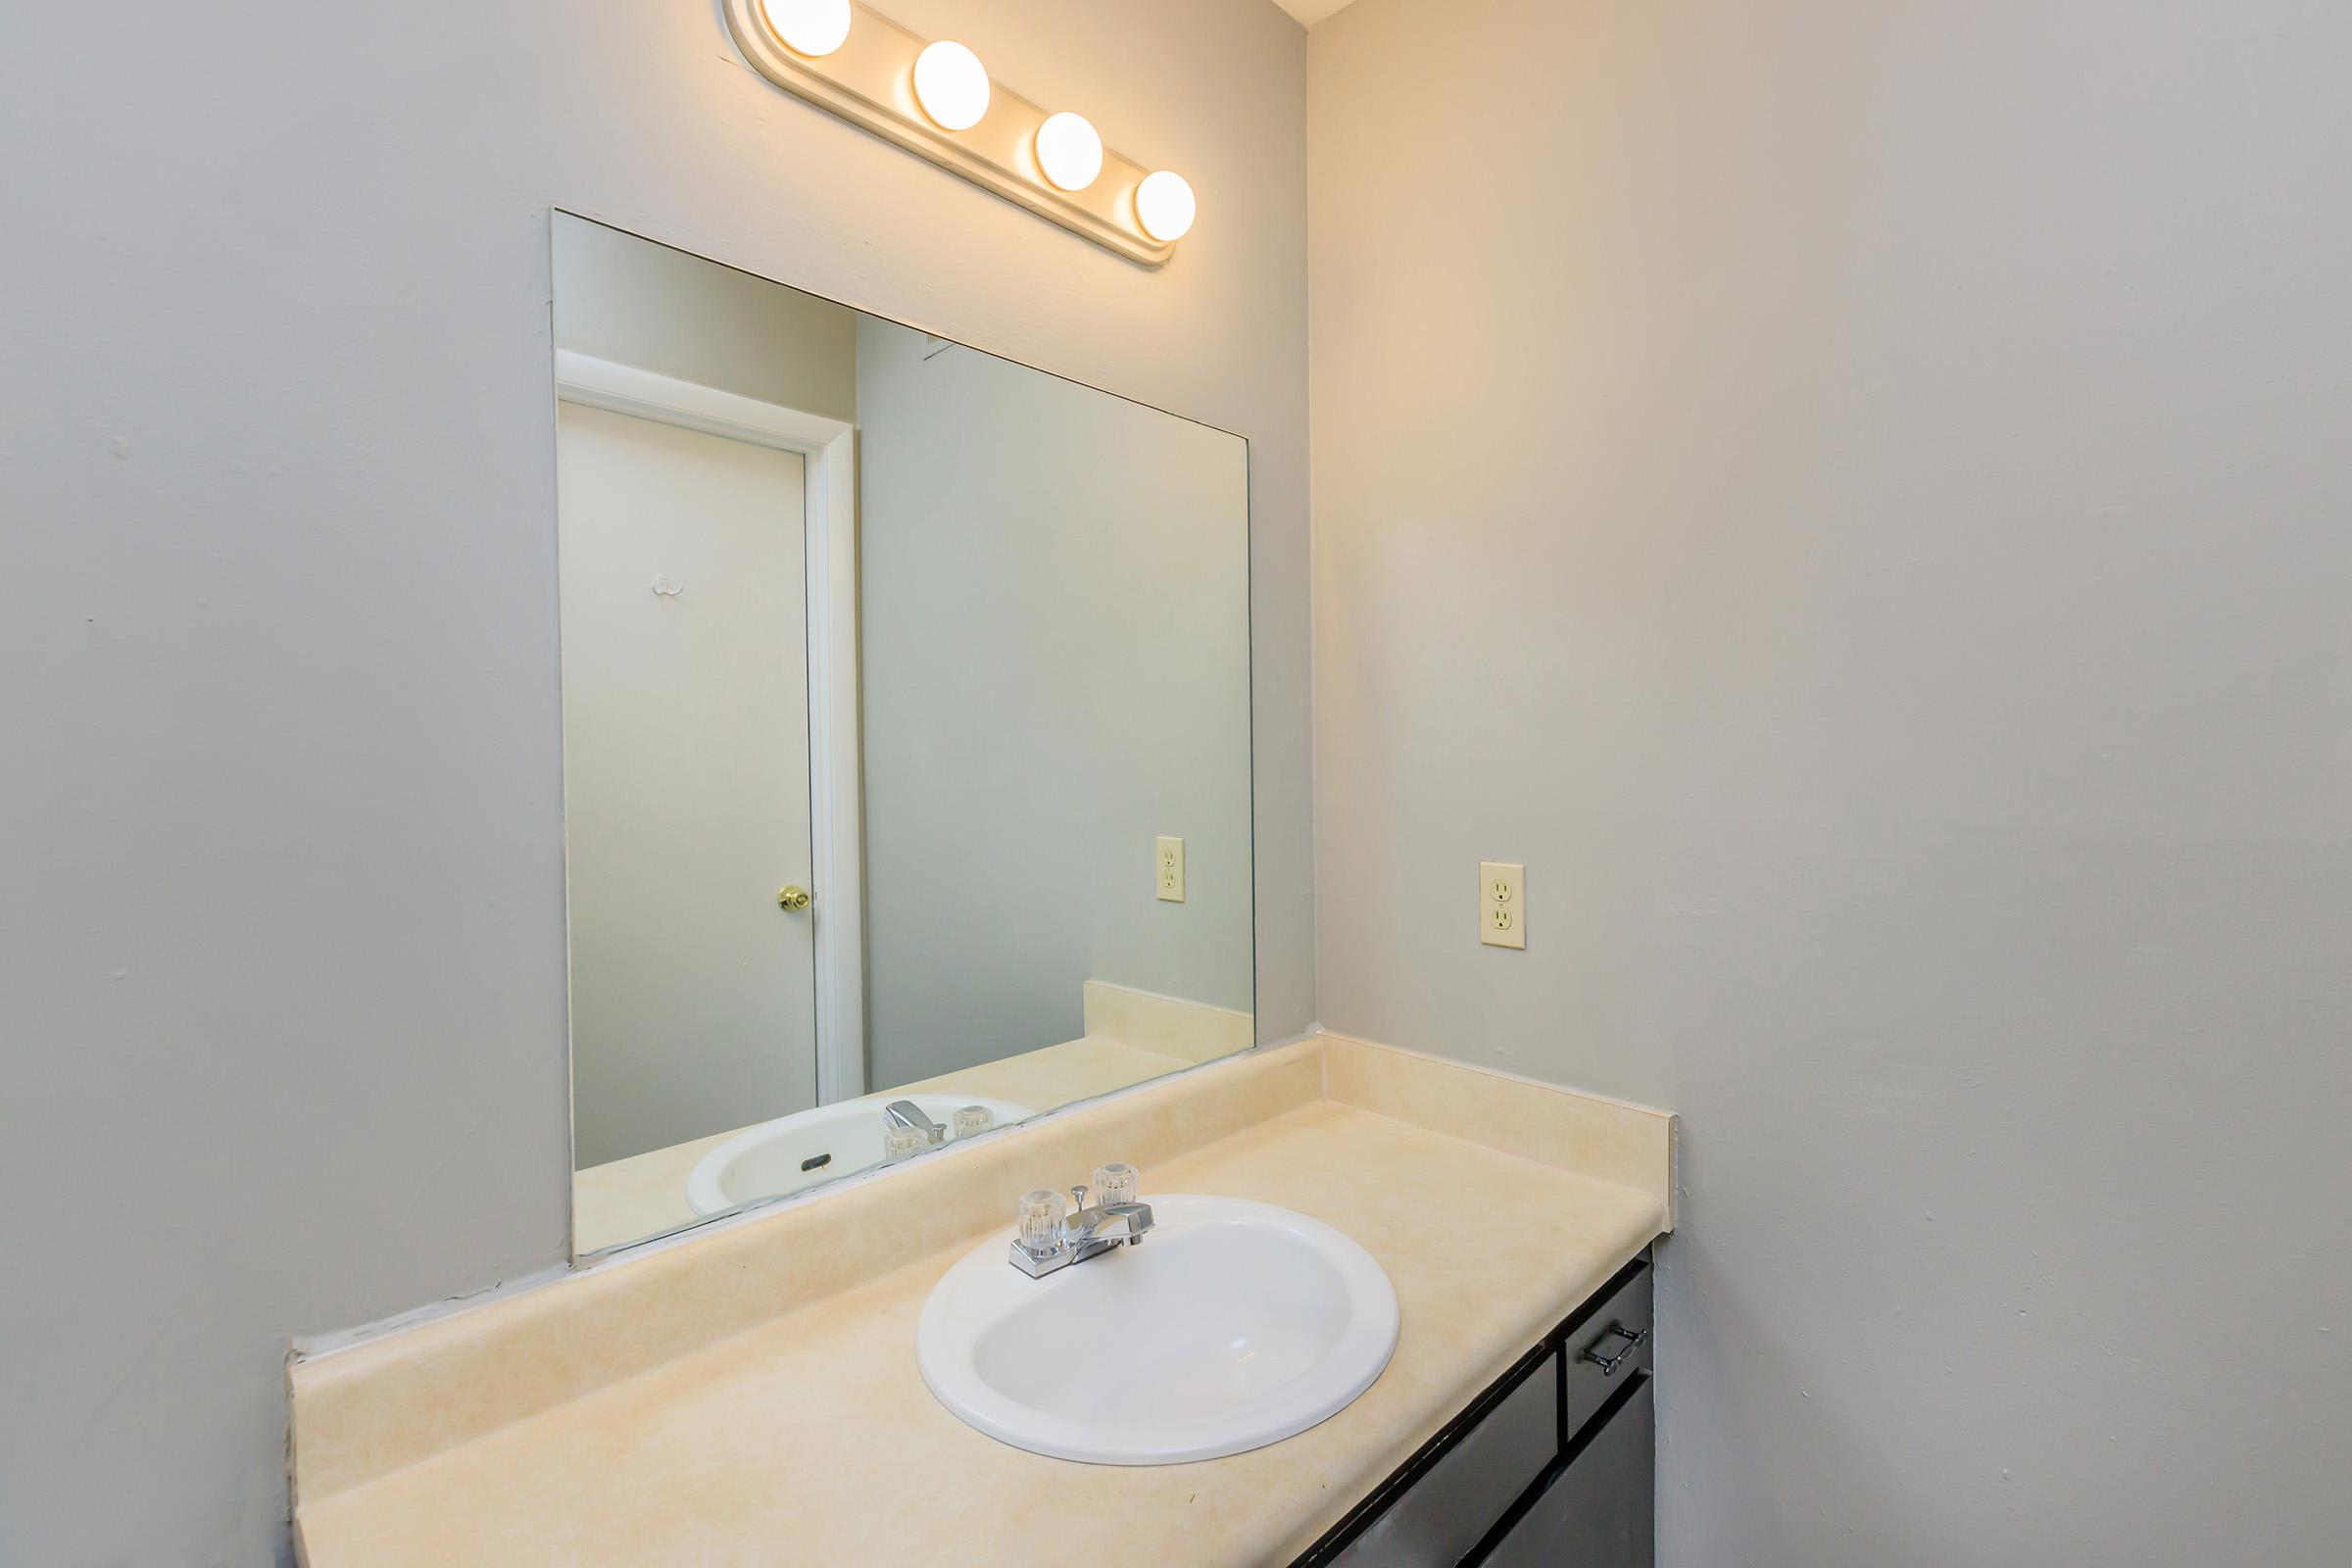 Large bathroom vanity with sink and mirror